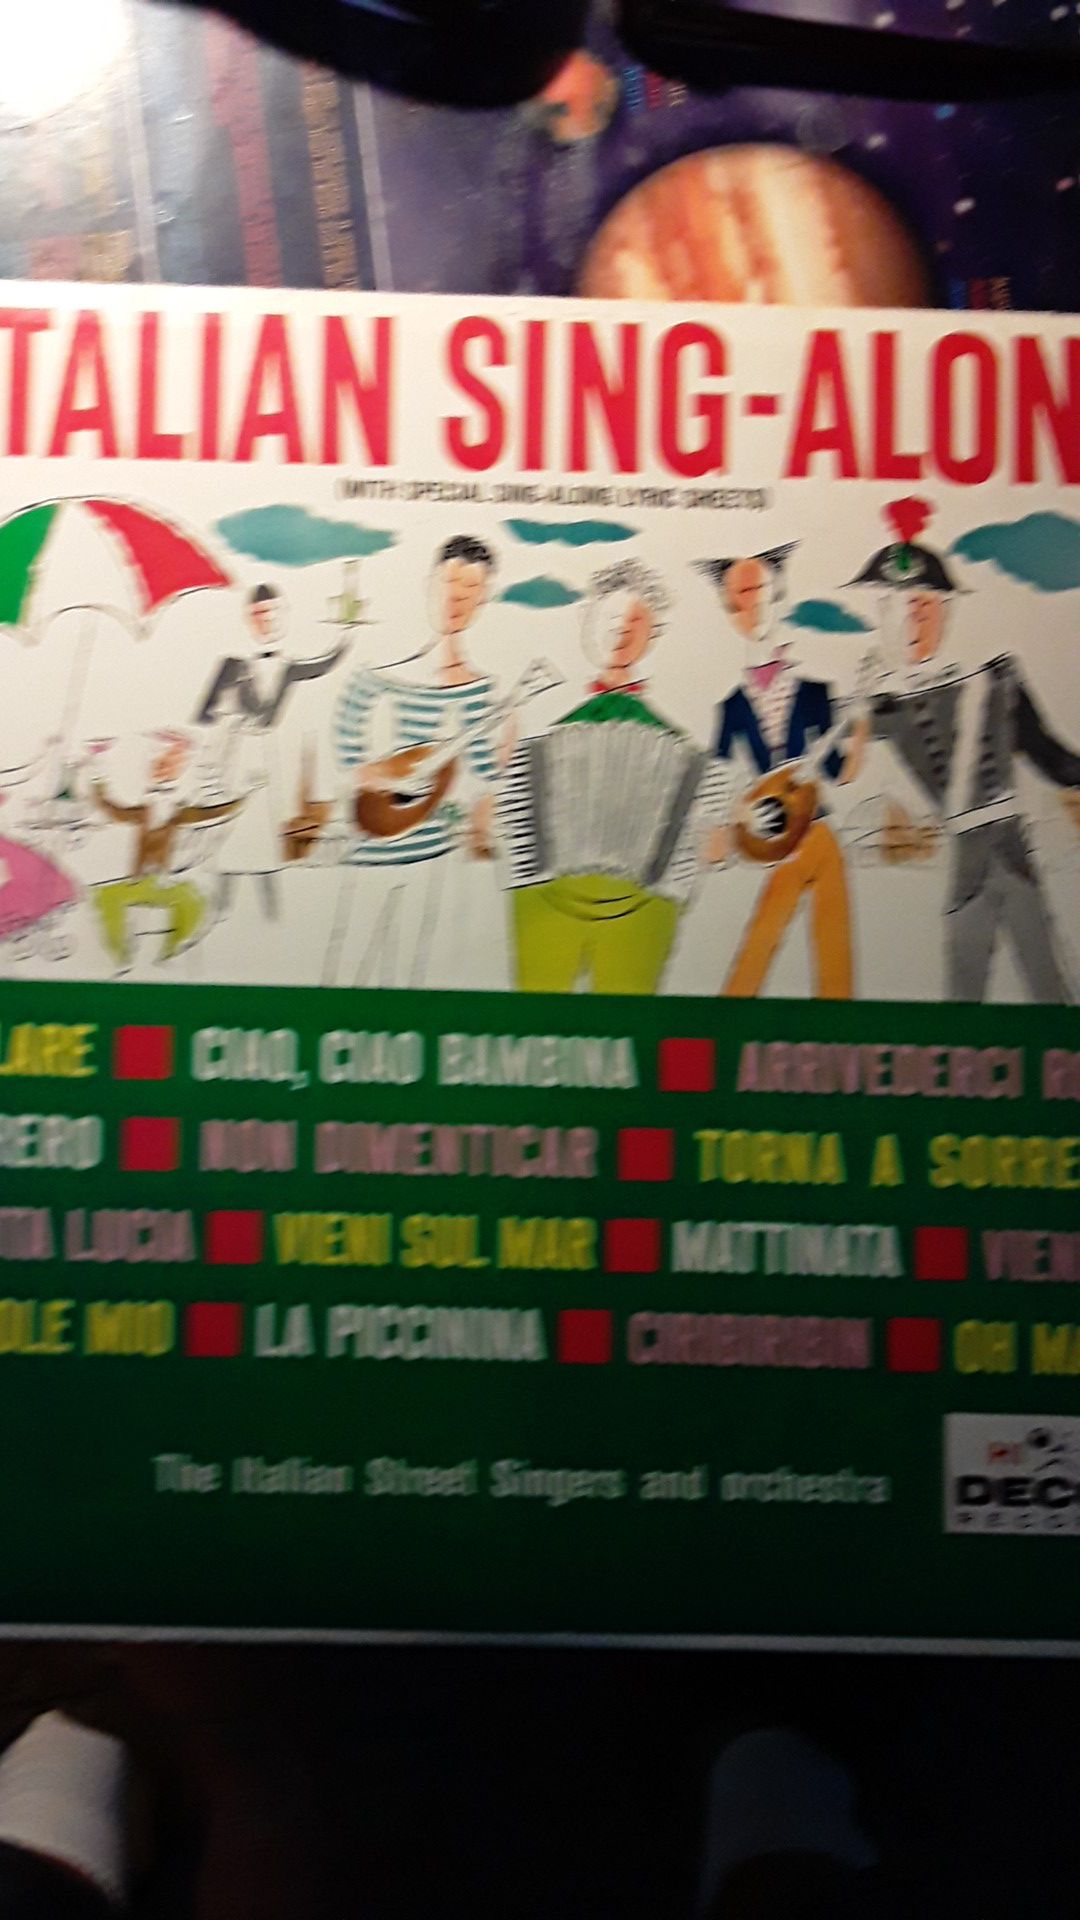 Italian sing along record